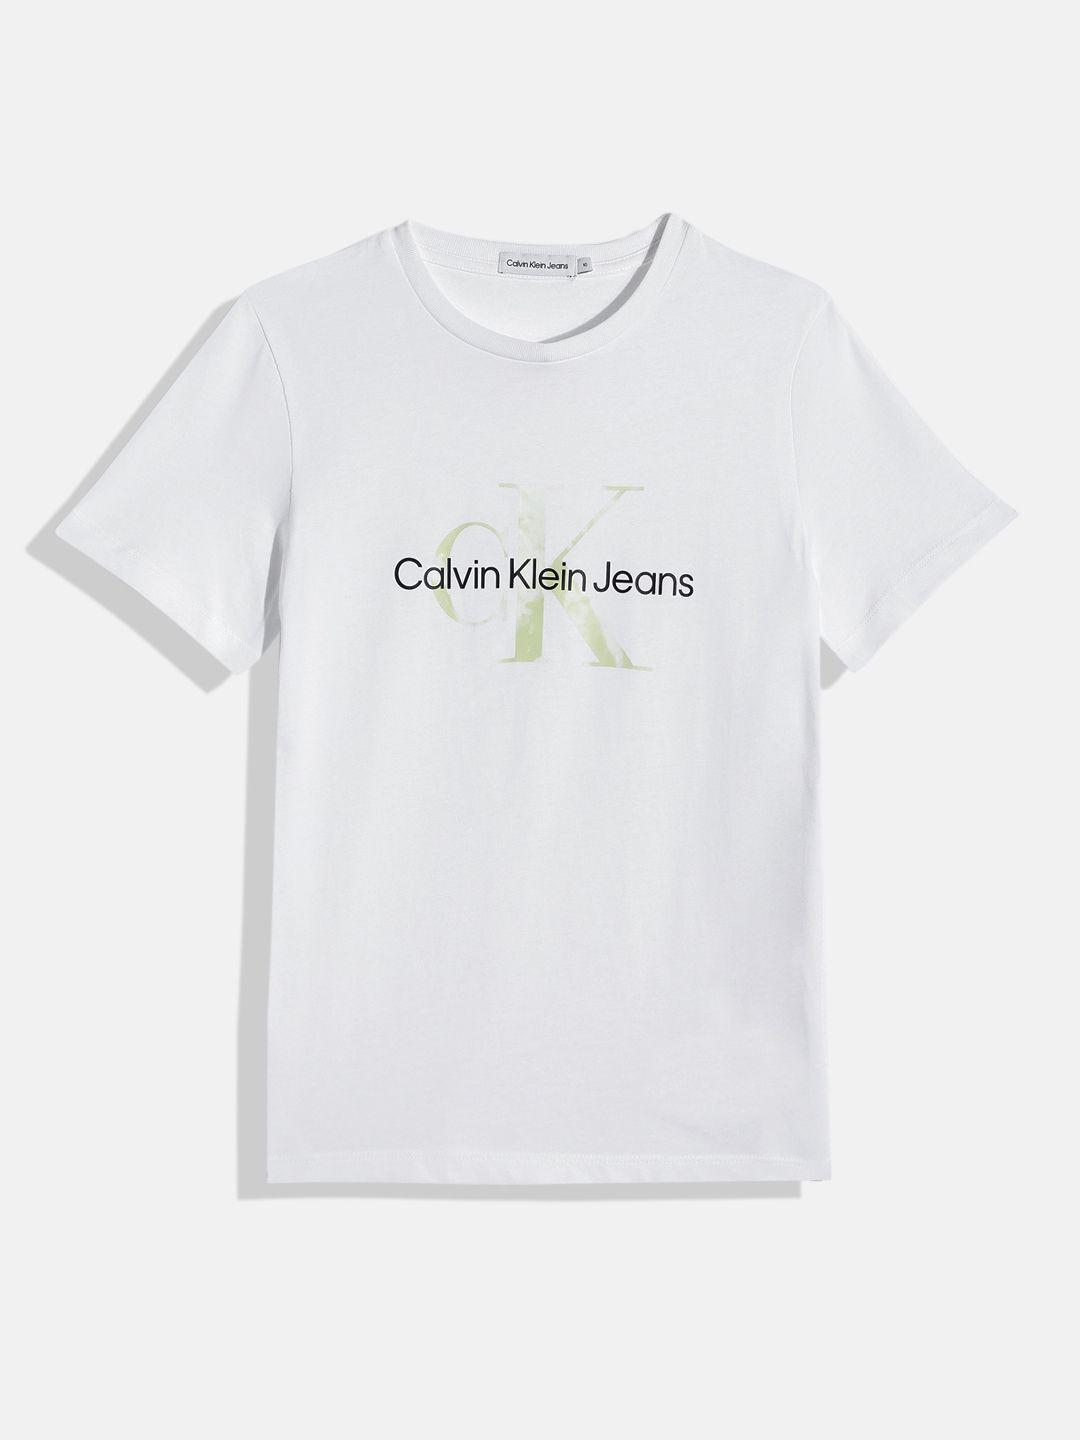 calvin klein unisex kids brand logo print knitted organic cotton t-shirt